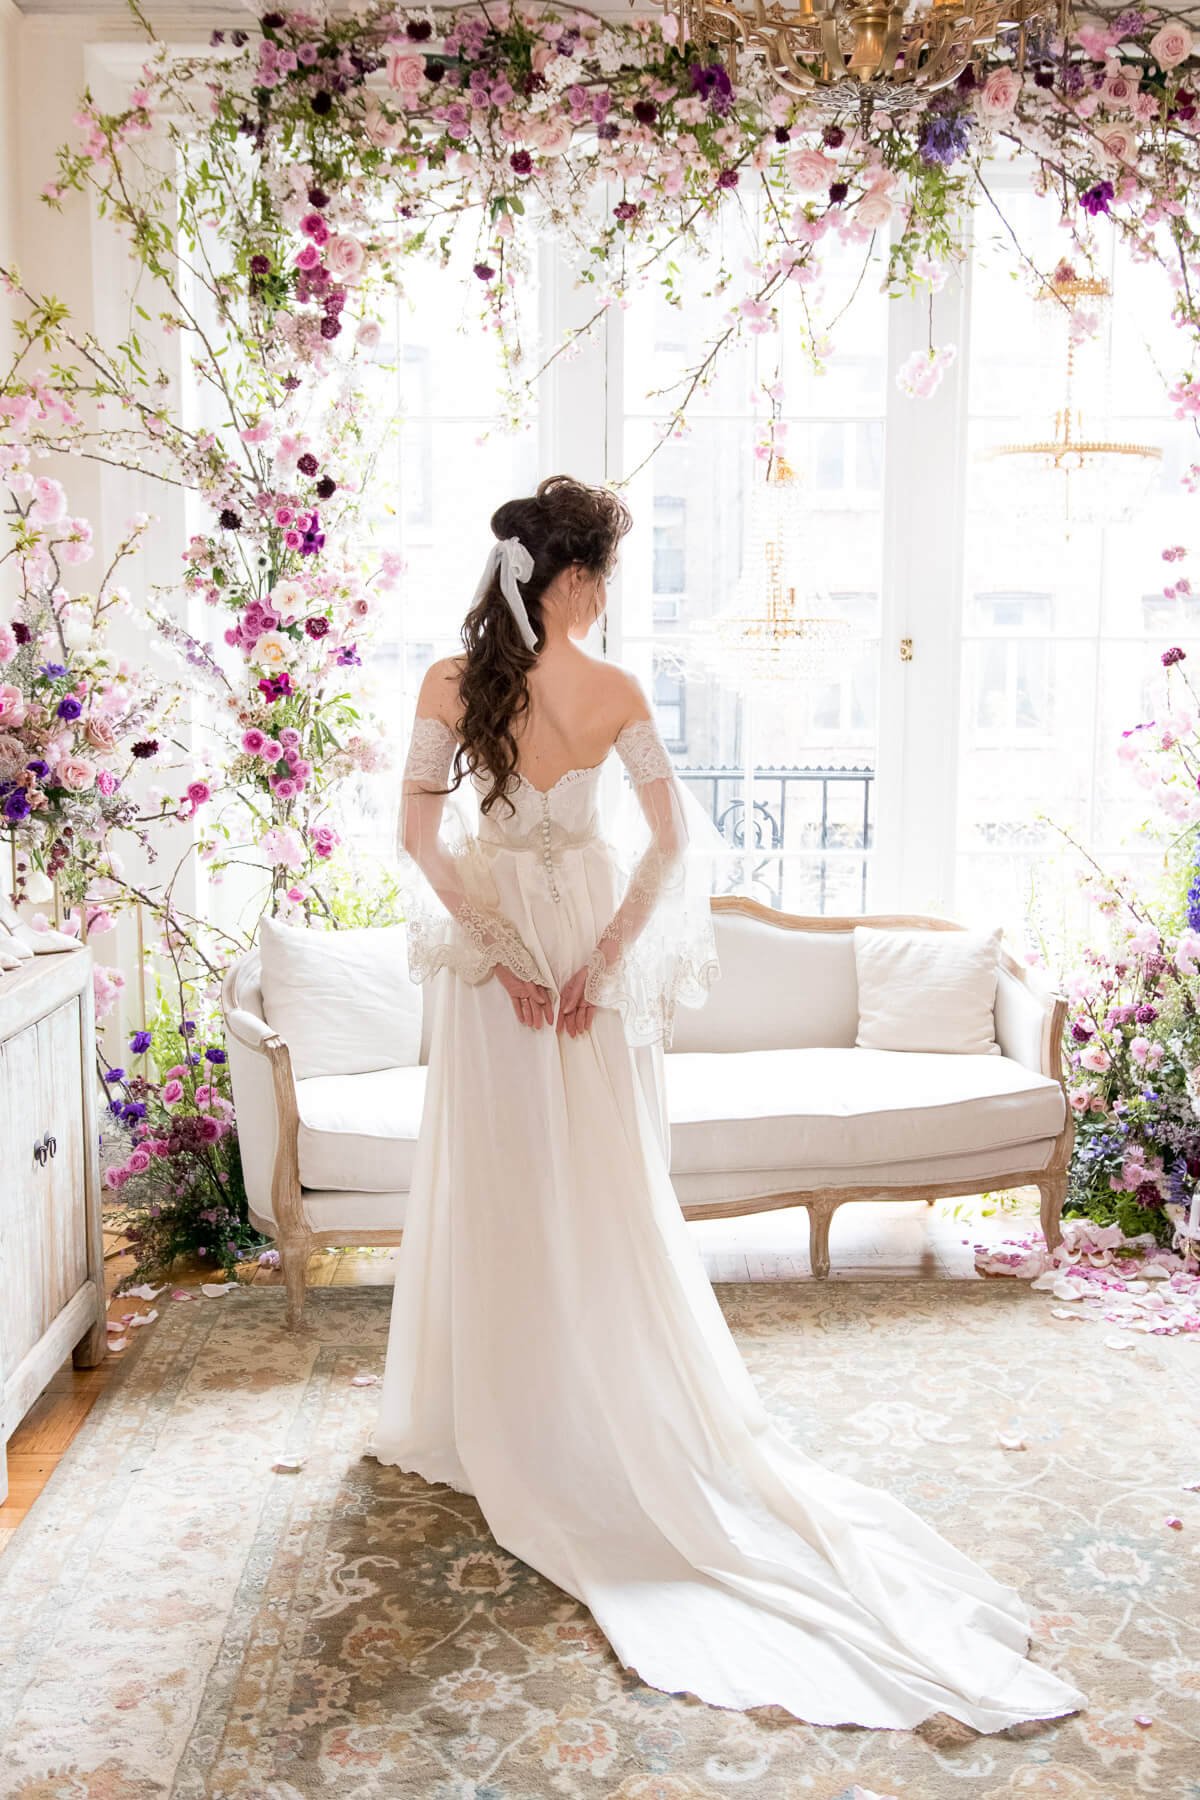 Morgan Newsom Claire Pettibone wedding dress designer New York photographer-1171.jpg